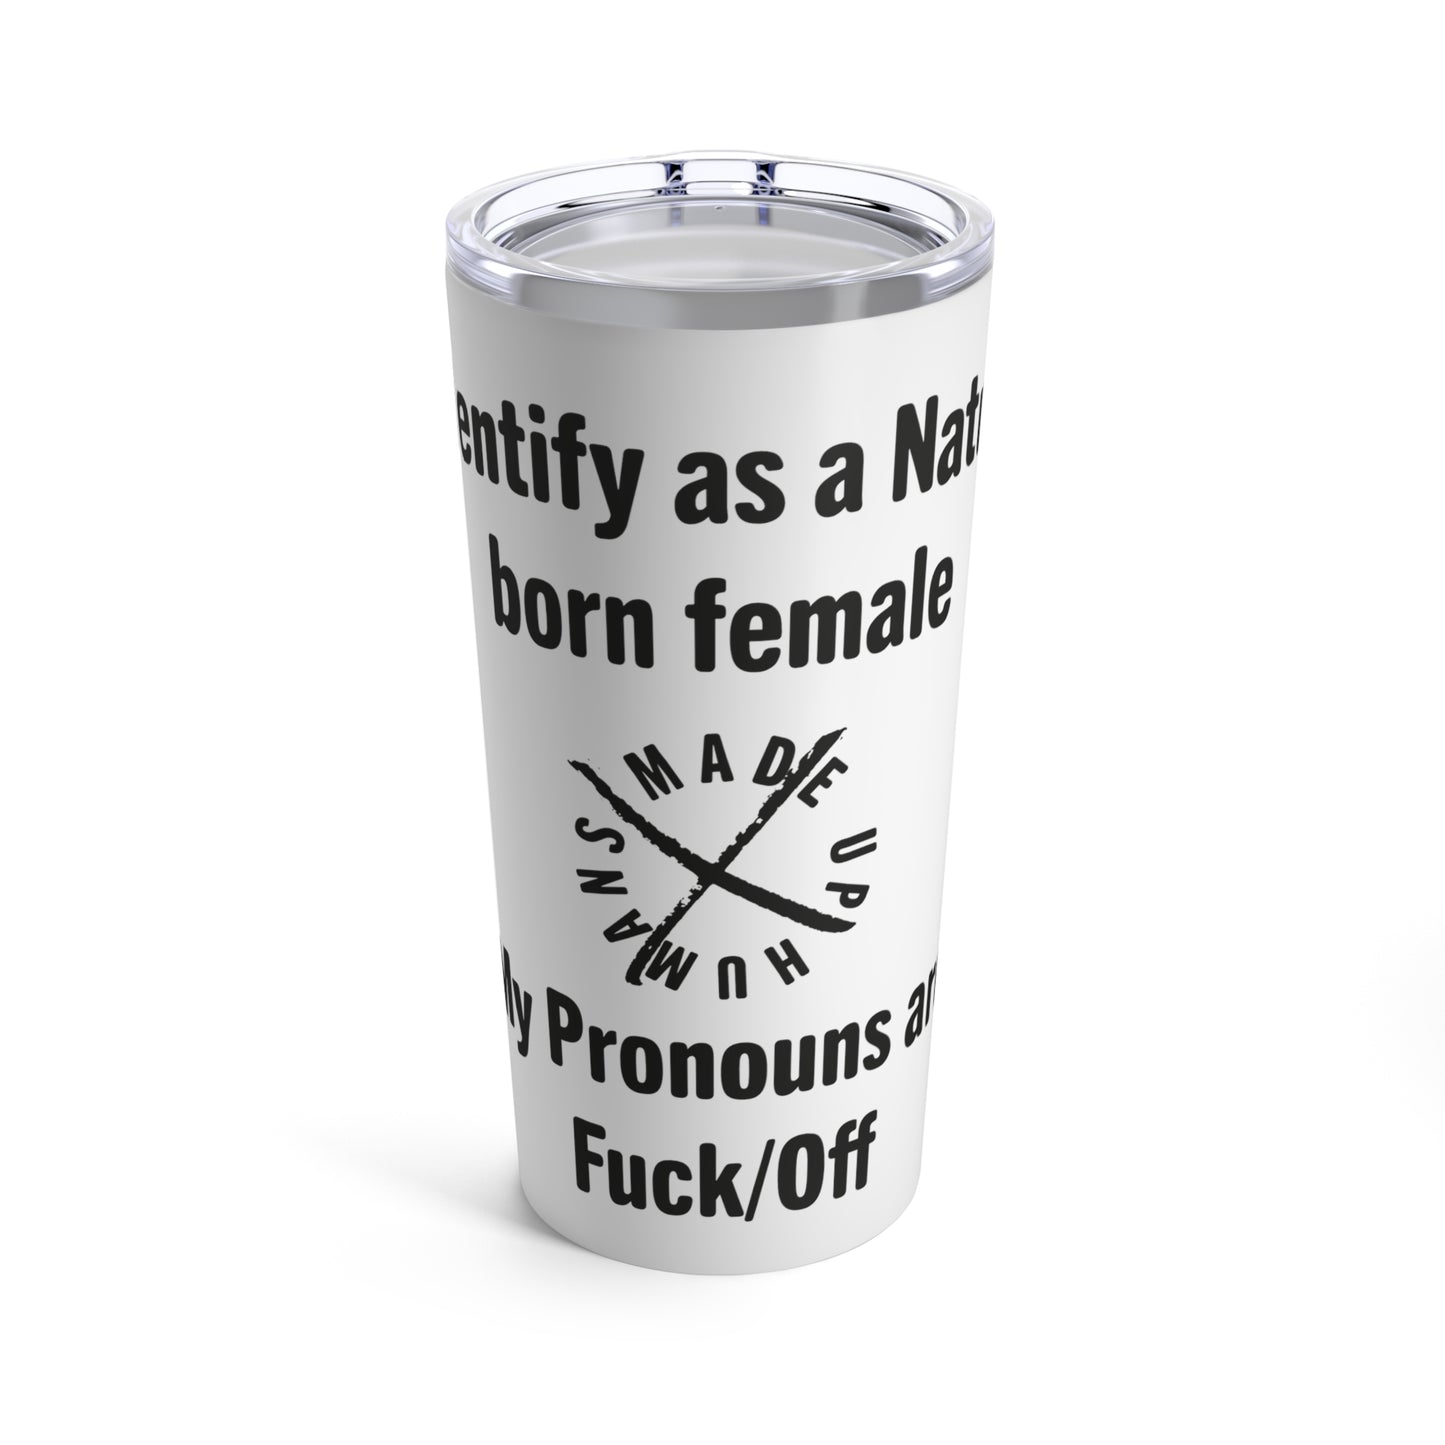 Female Definition "Fuck/Off" Pro Noun Tumbler 20oz